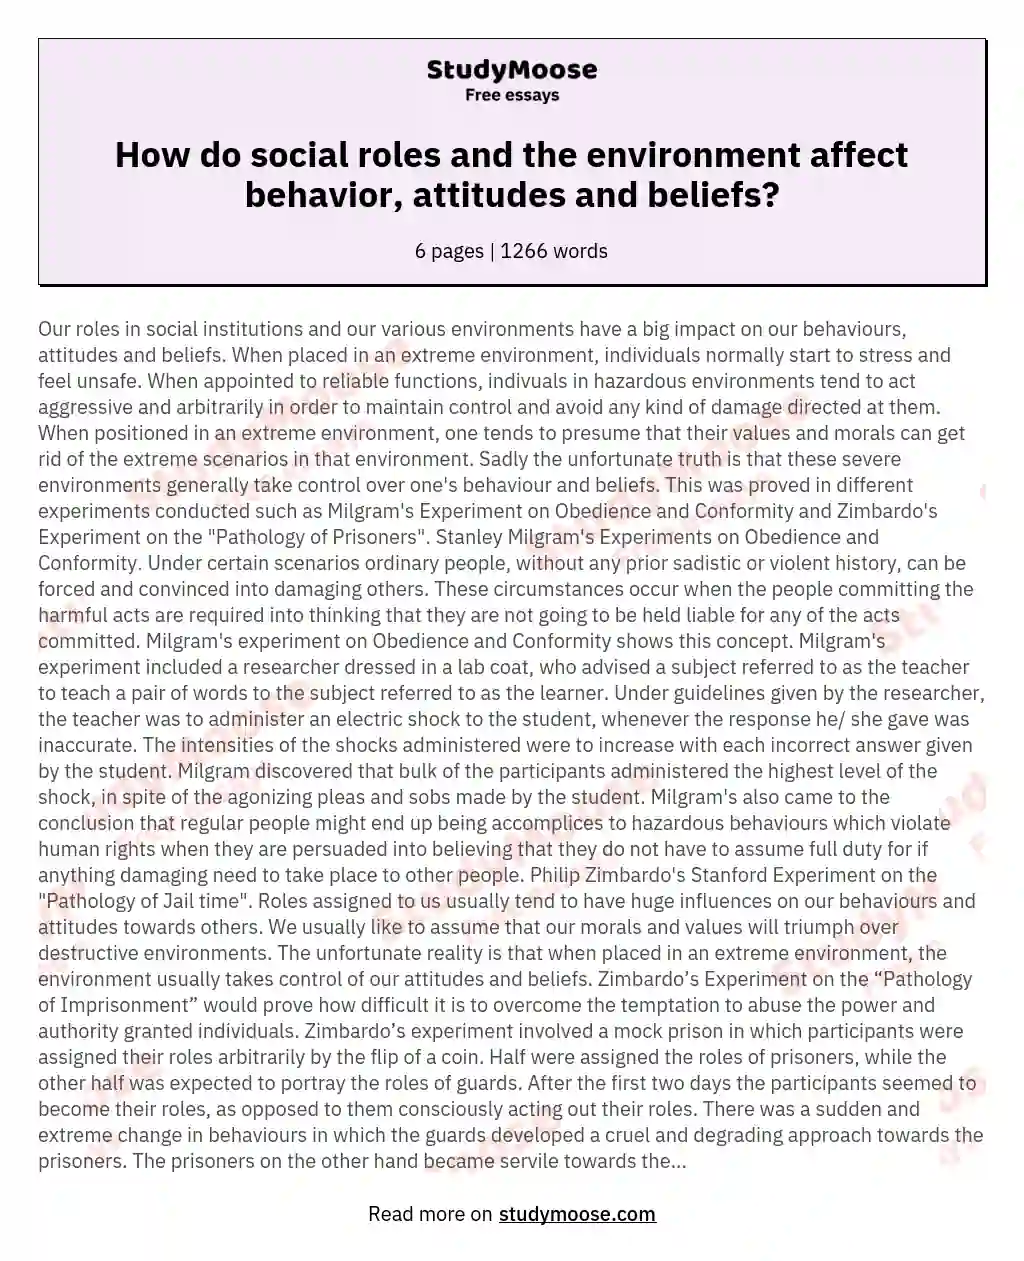 How do social roles and the environment affect behavior, attitudes and beliefs?